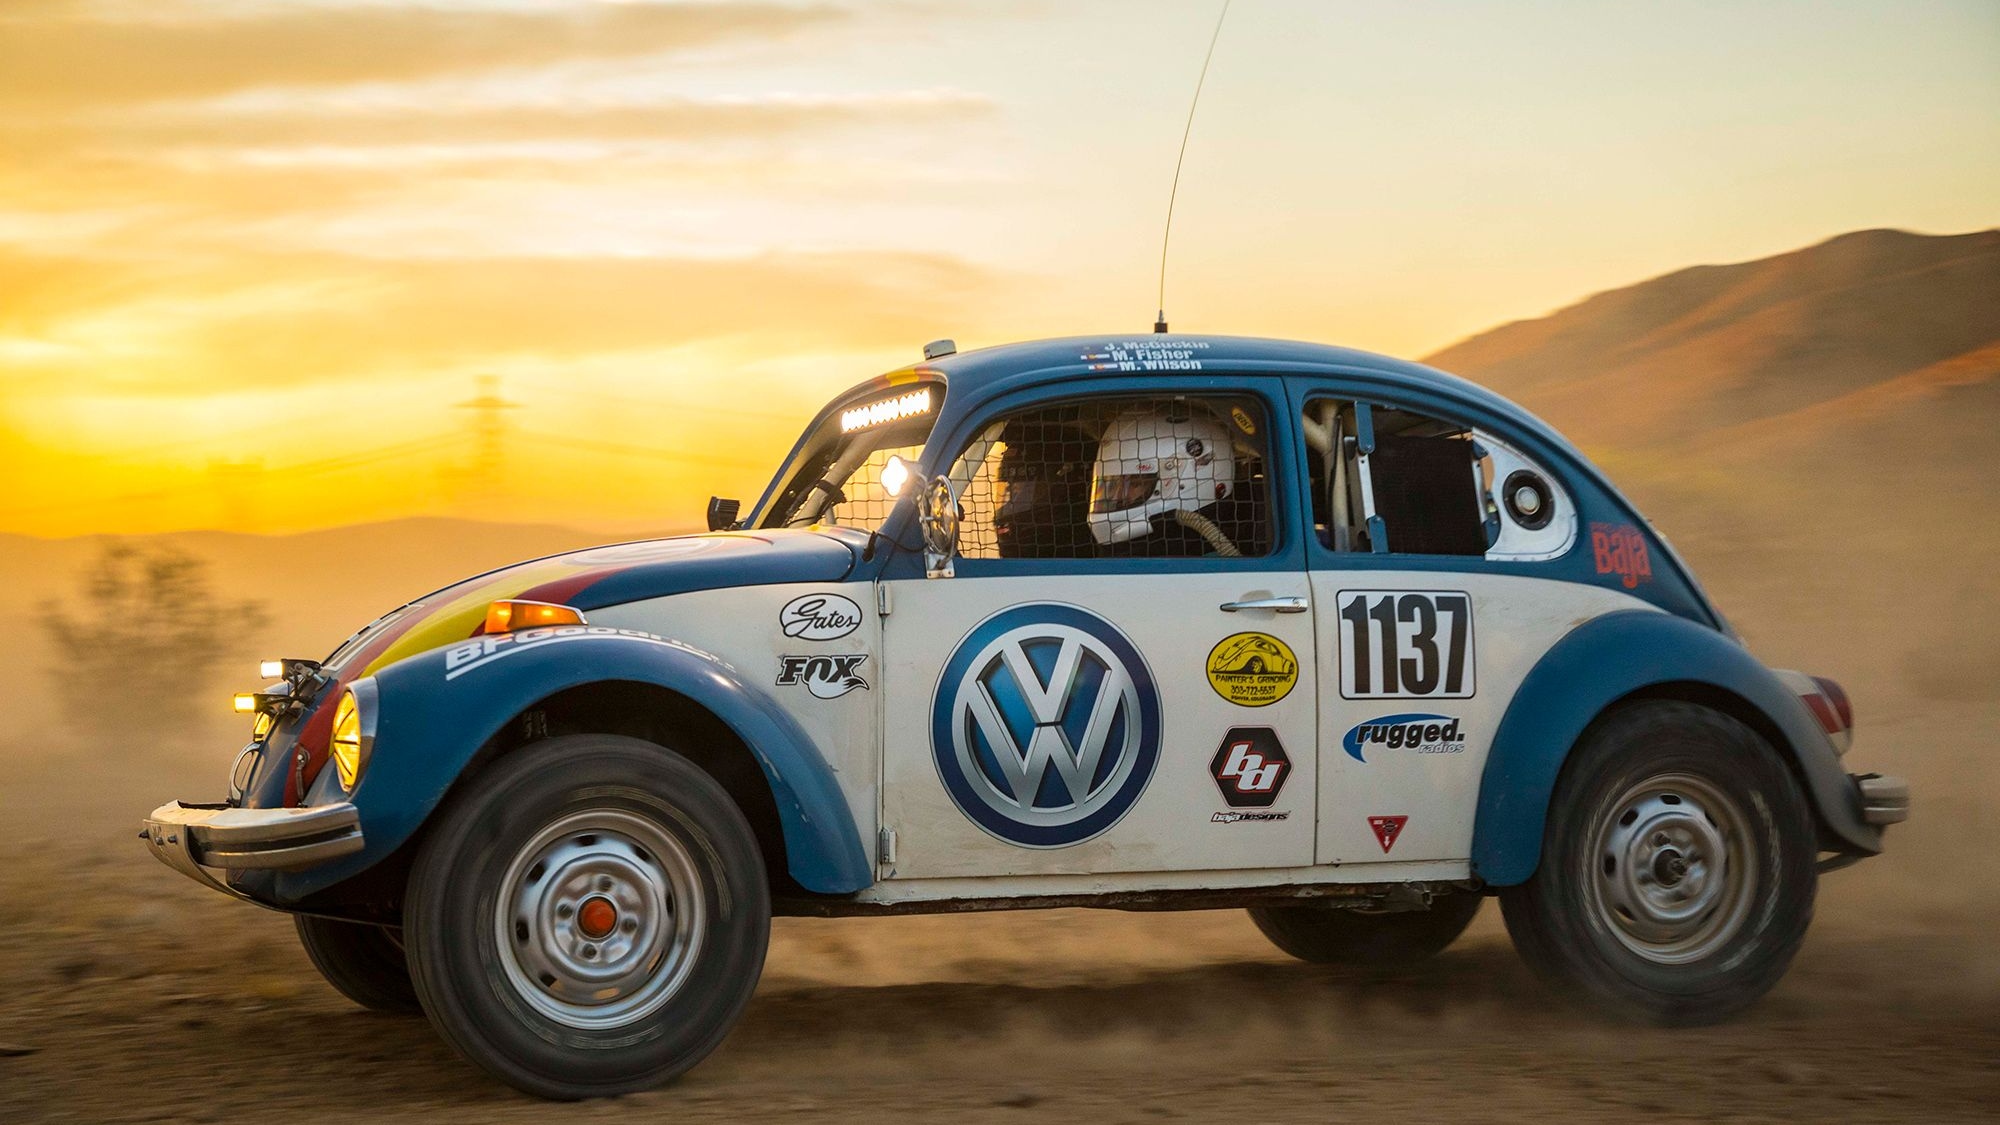 Volkswagen looks back on 50 years of Baja racing